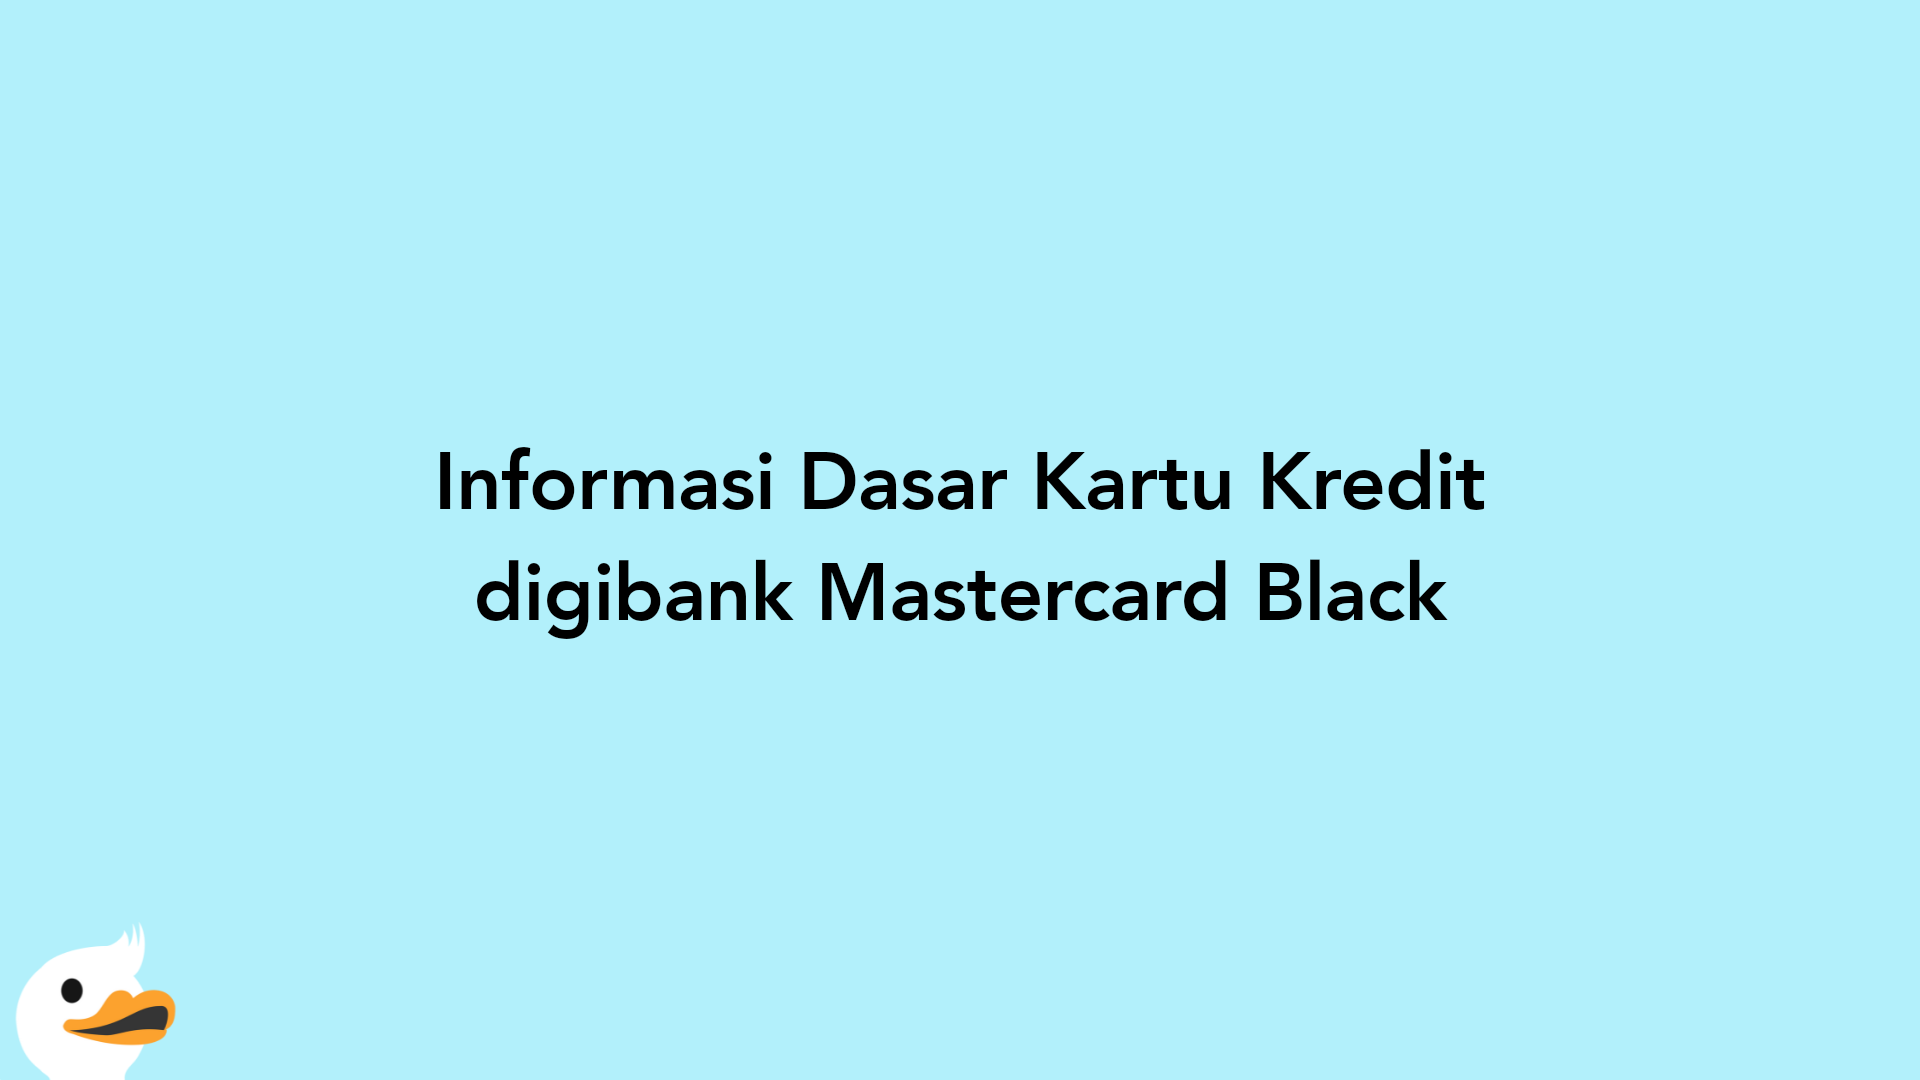 Informasi Dasar Kartu Kredit digibank Mastercard Black